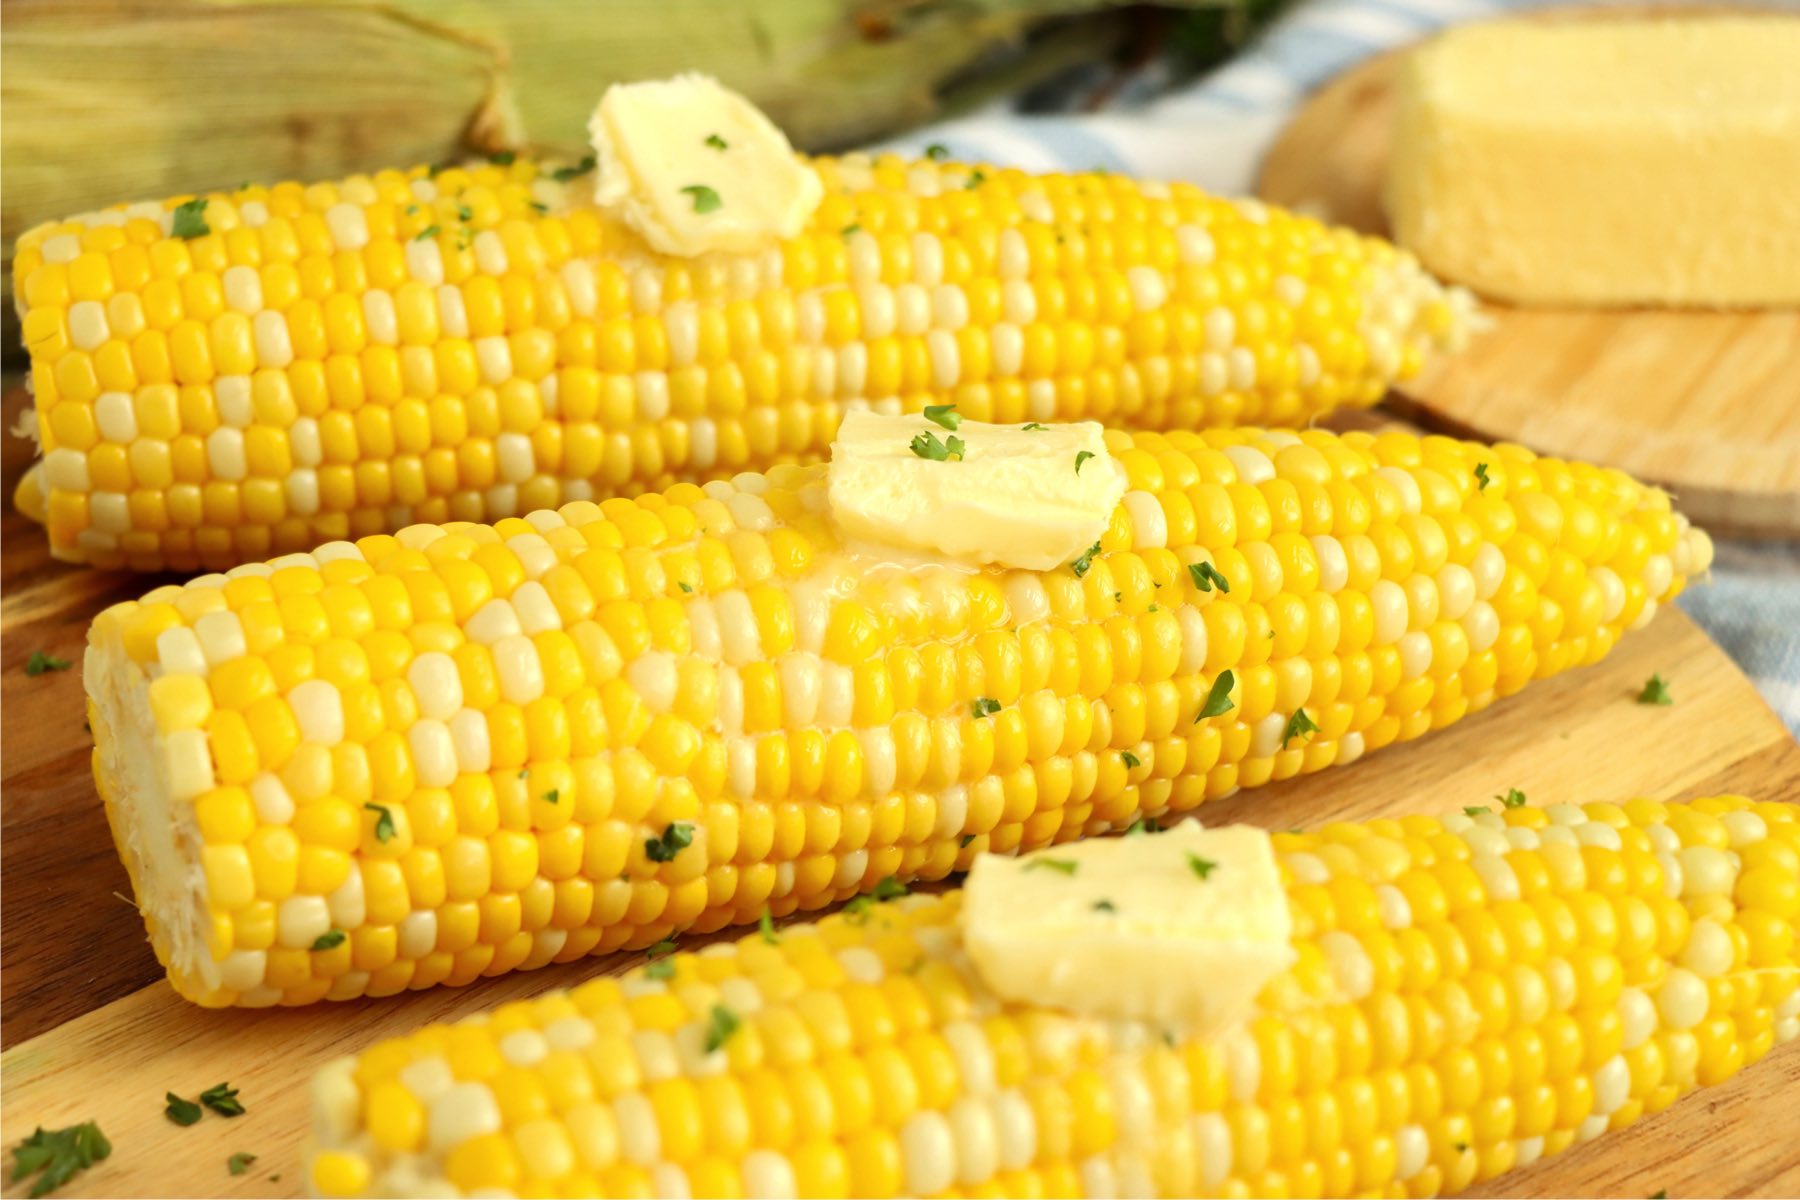 Easiest Way to Make Corn on the Cob